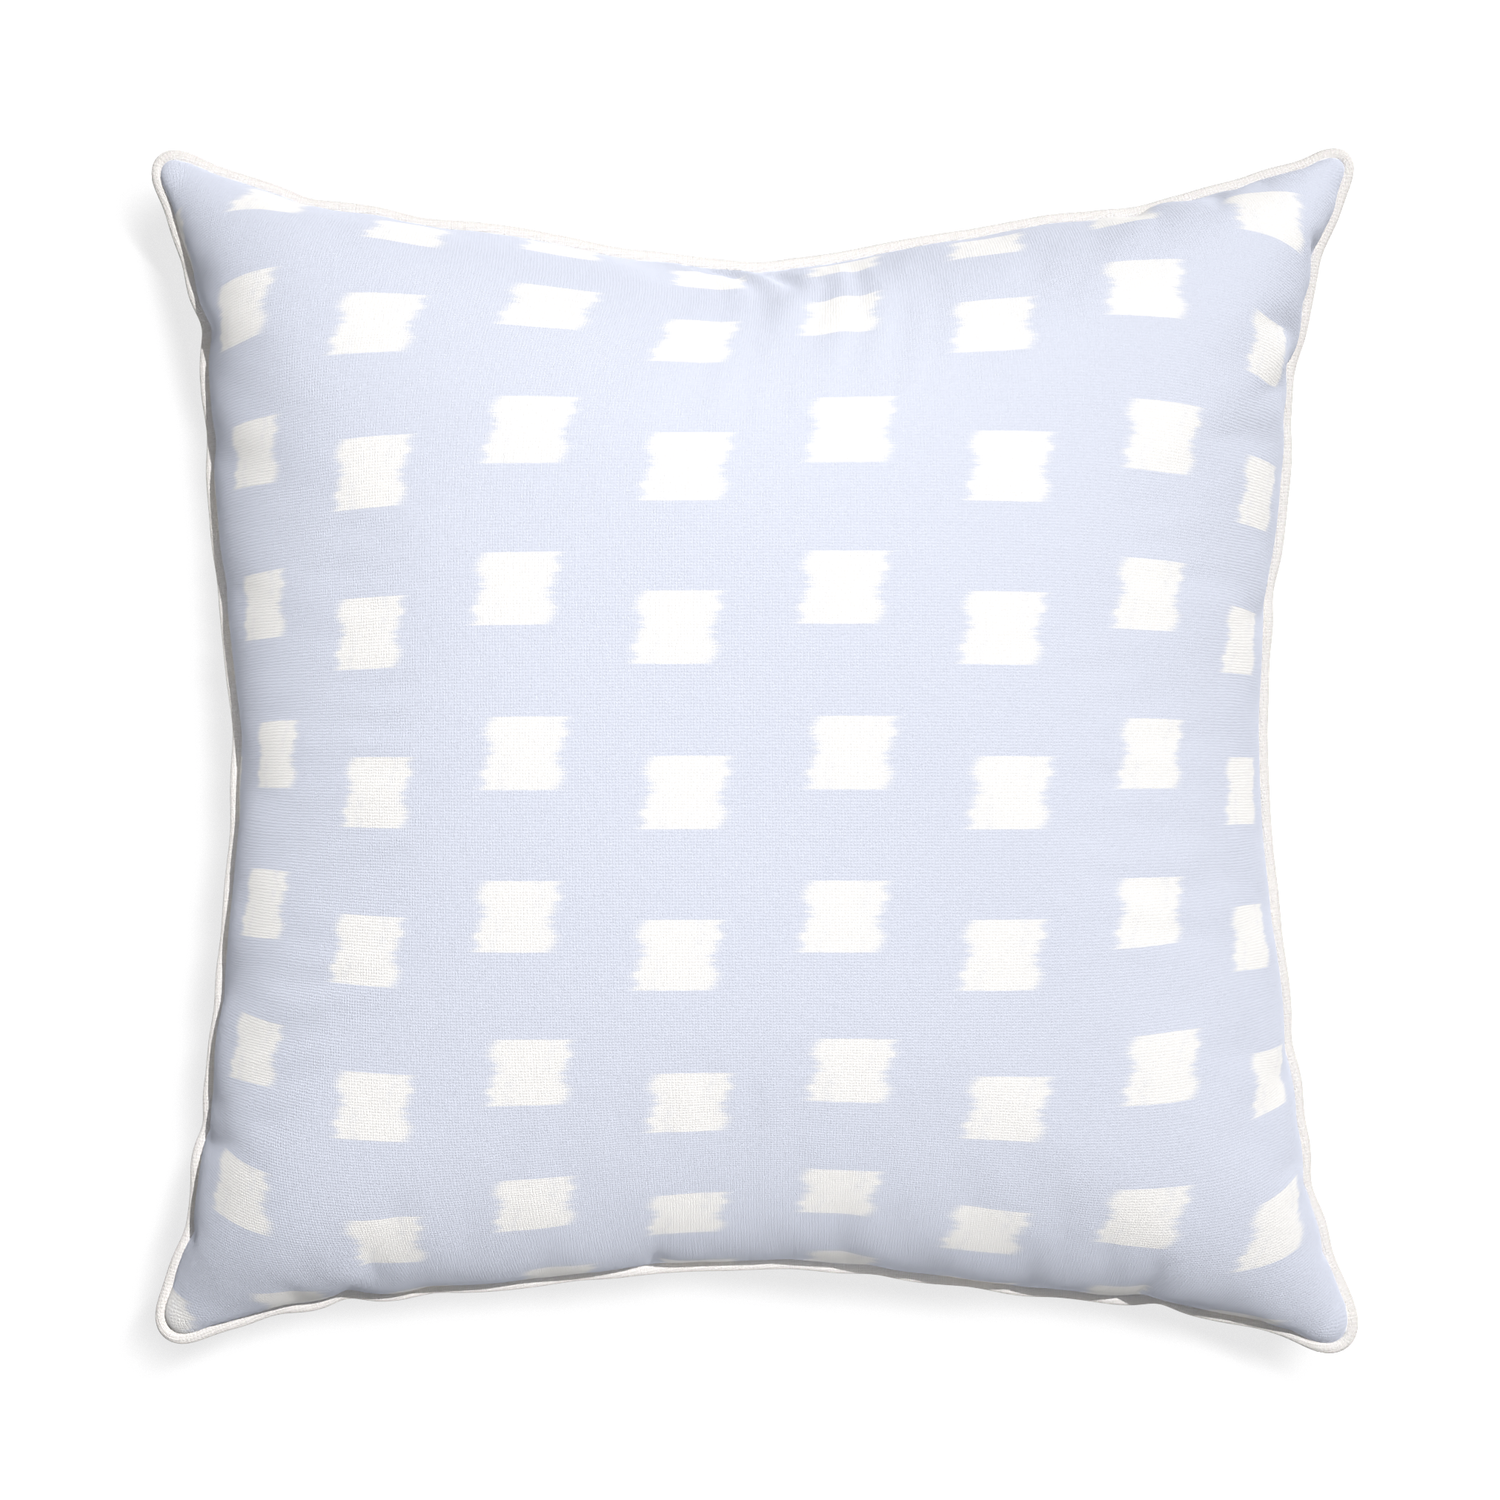 Euro-sham denton custom pillow with snow piping on white background